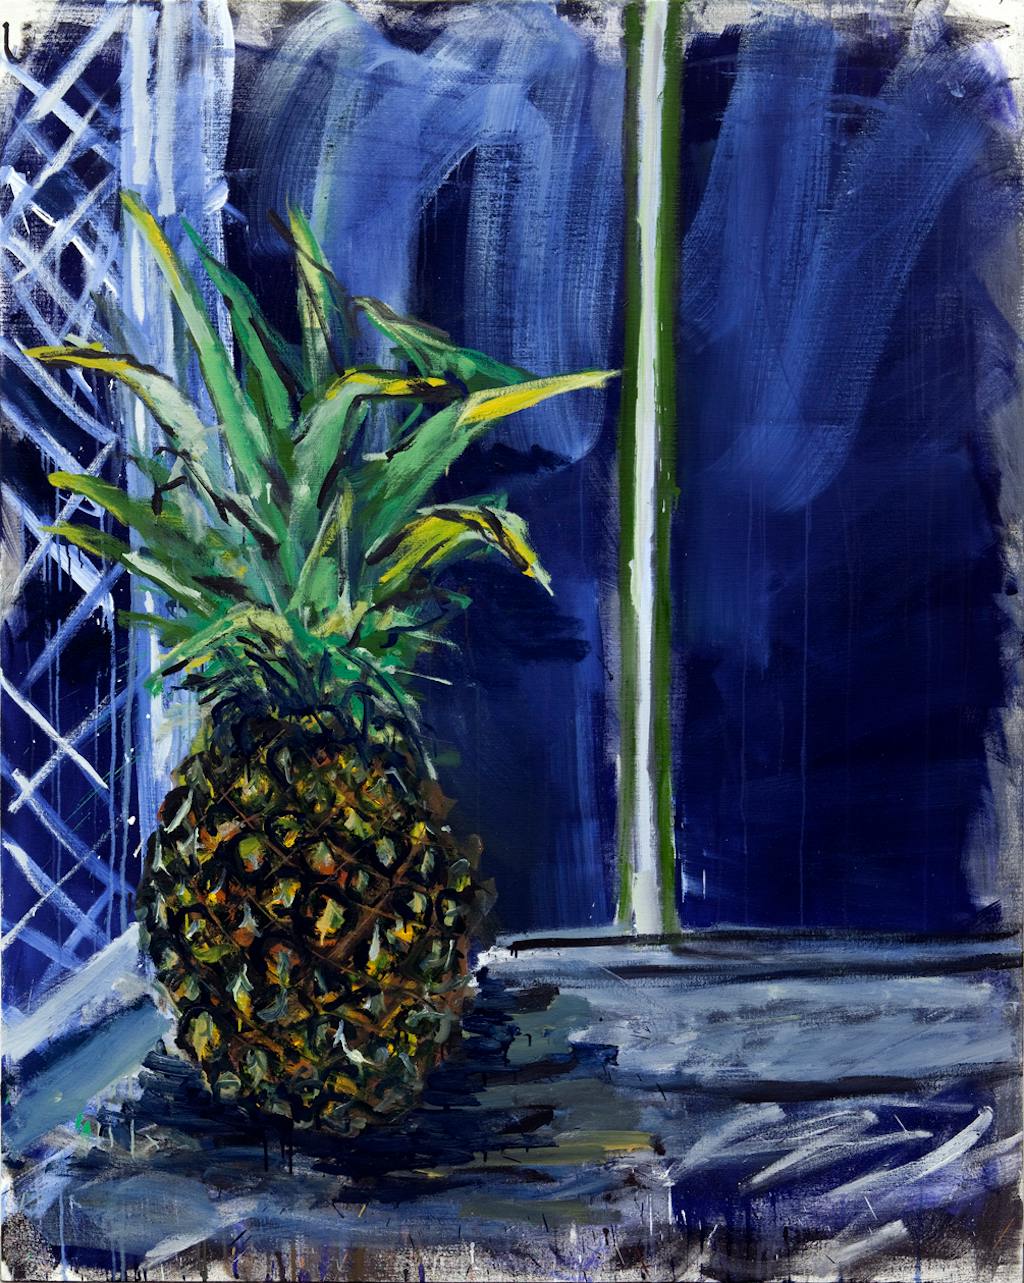 Windows and ananas 3 - © kamel mennour